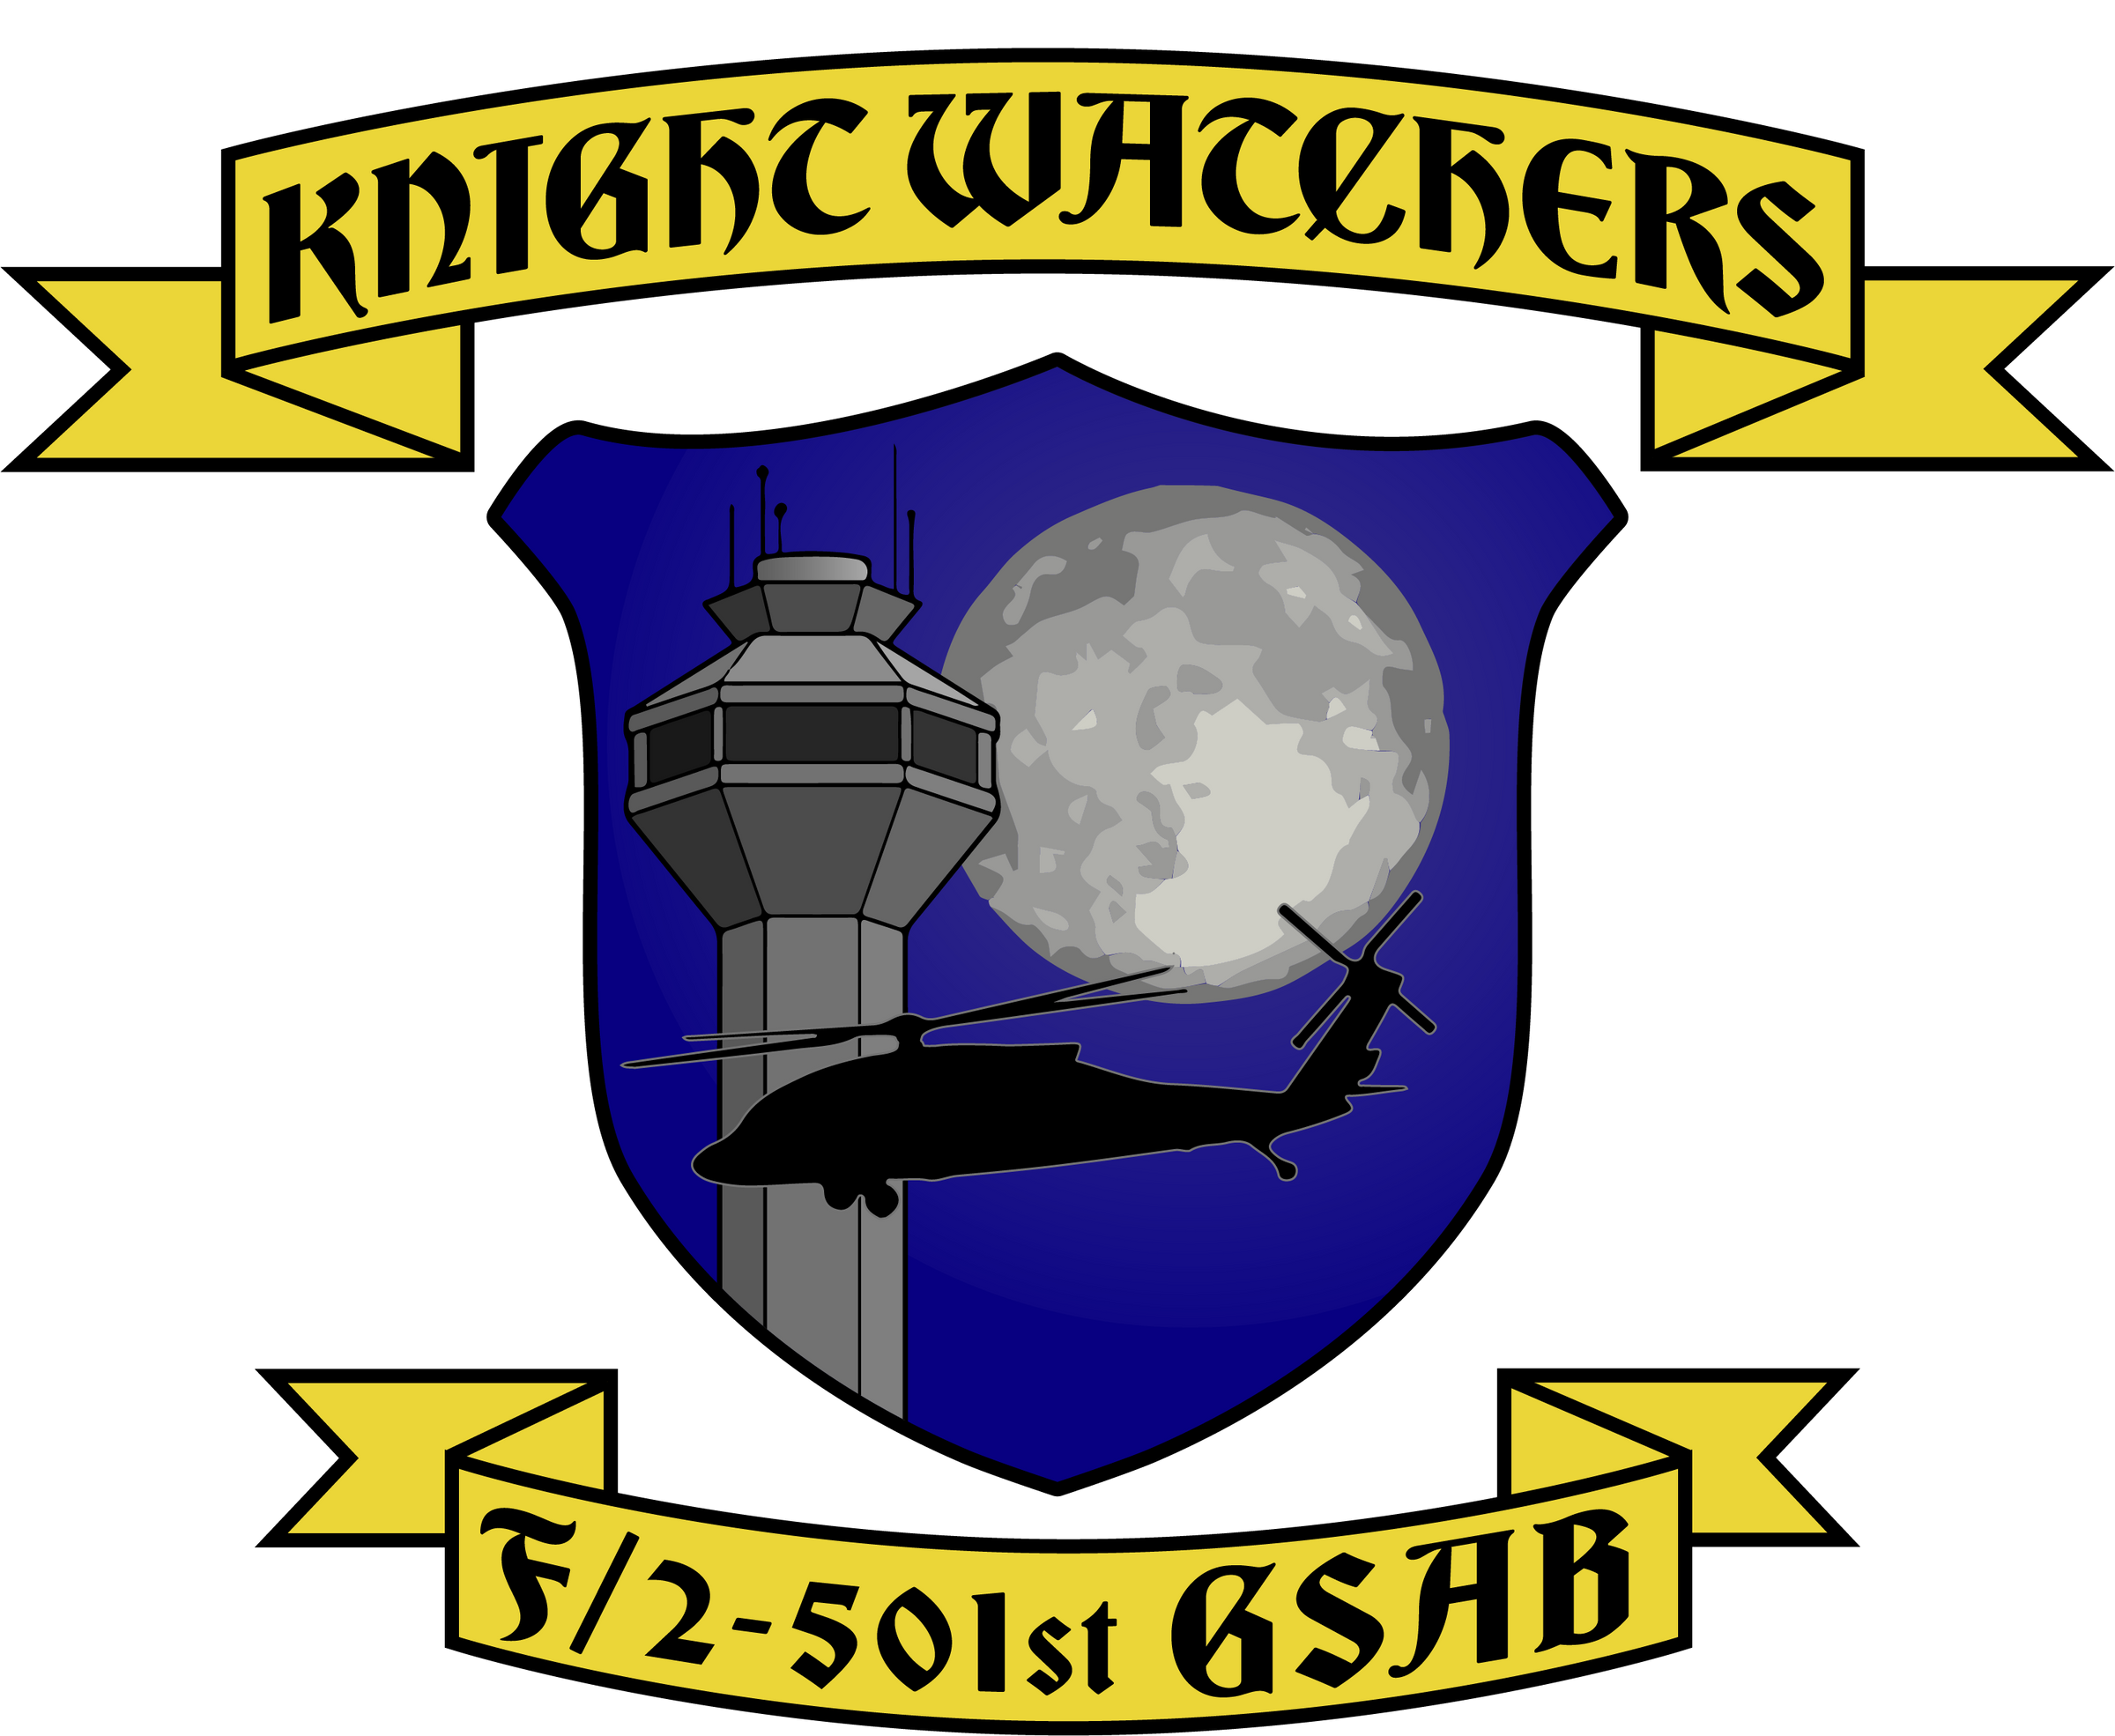 F Co, 2-501 GSAB "Knight Watchers"